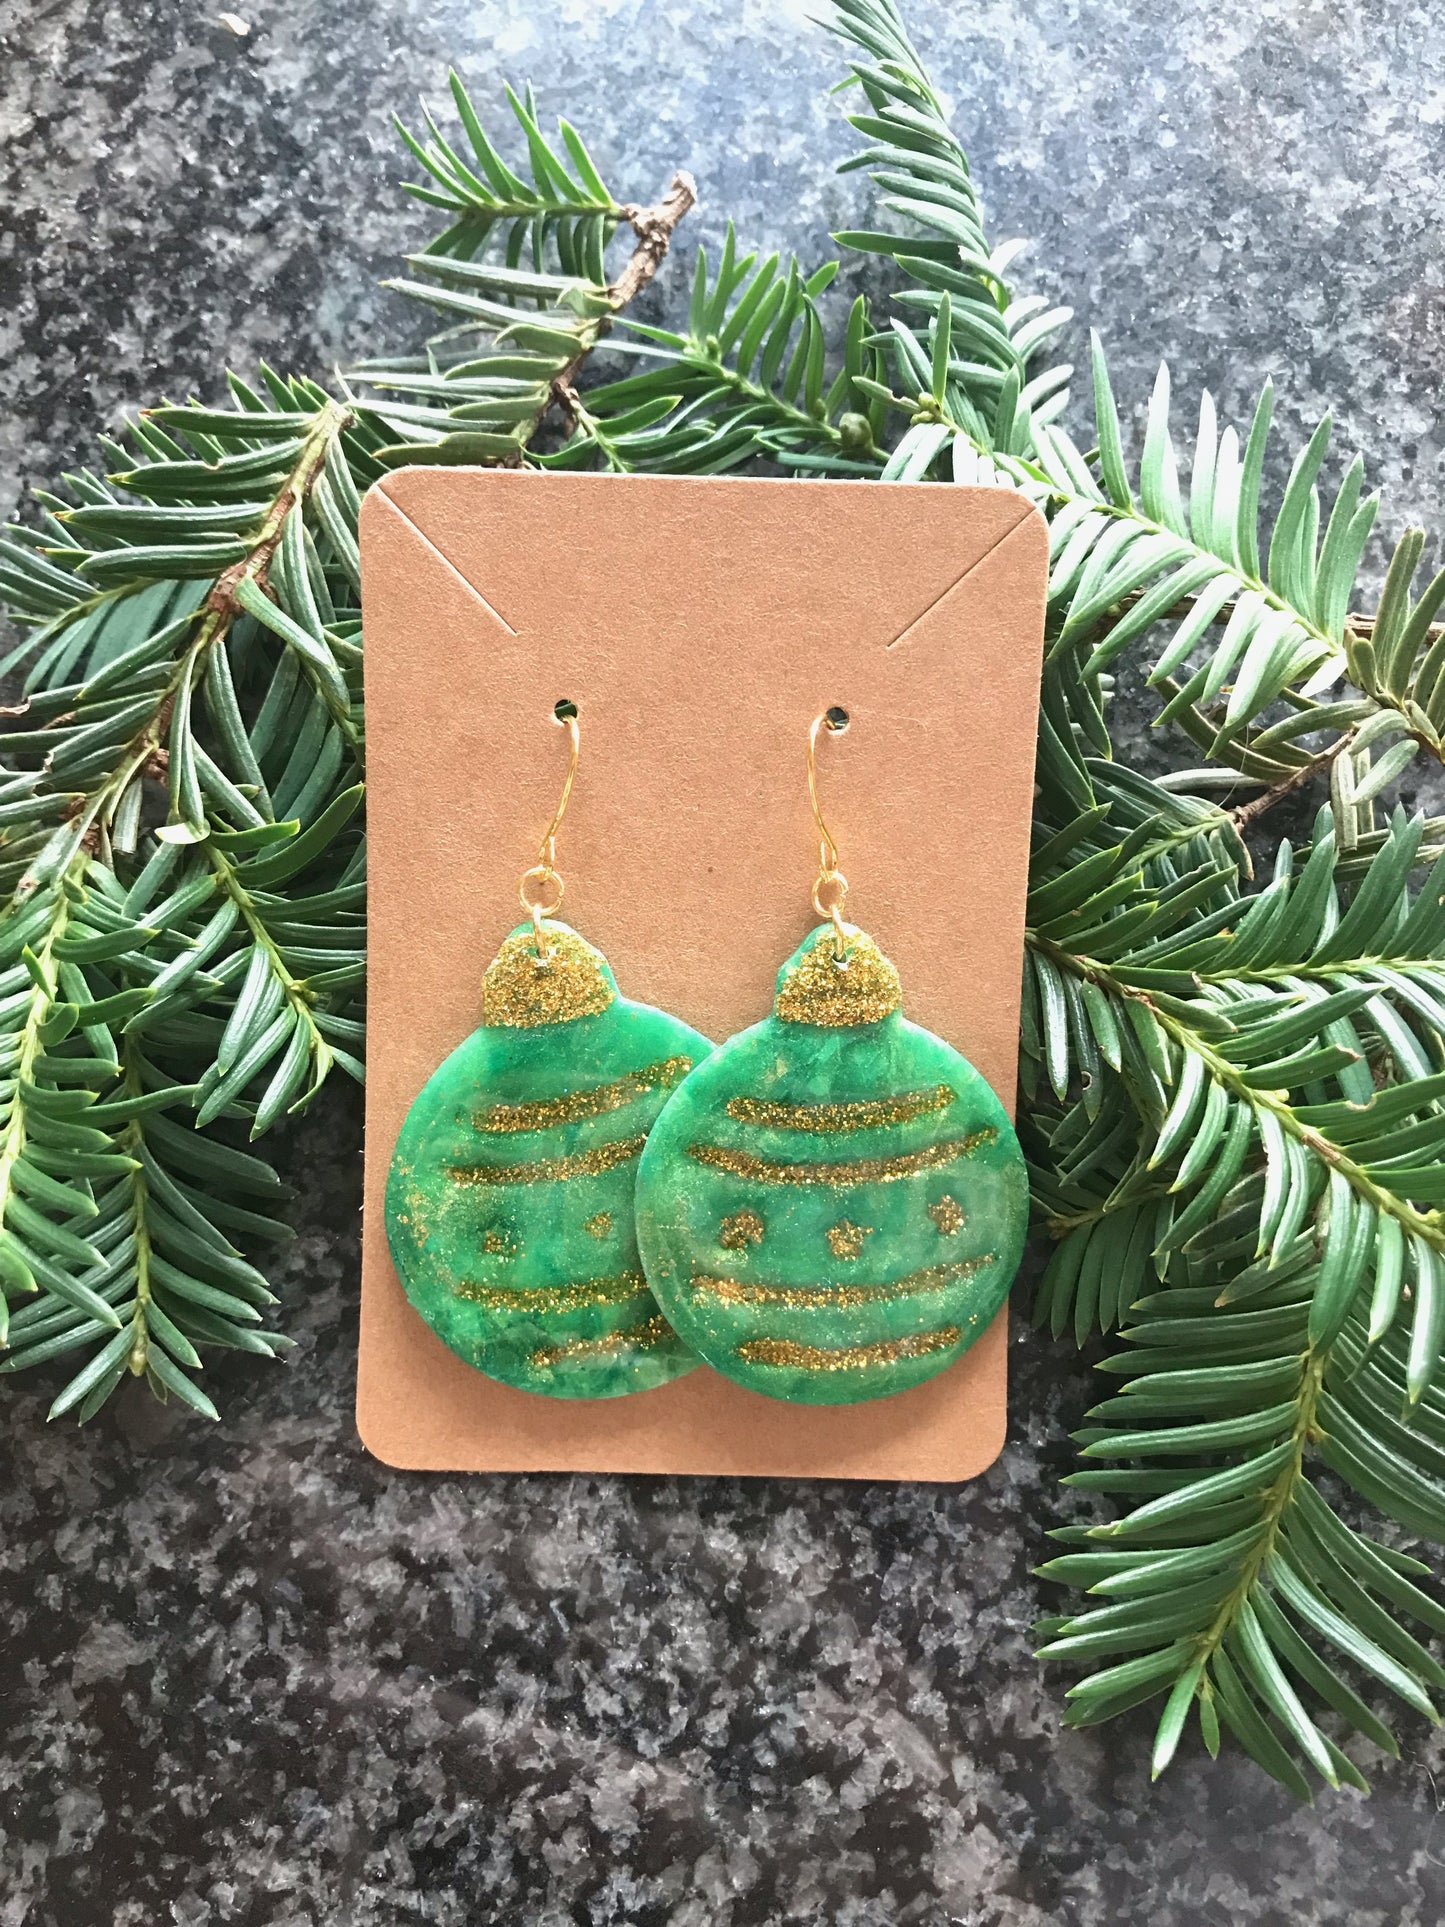 Green Christmas tree balls